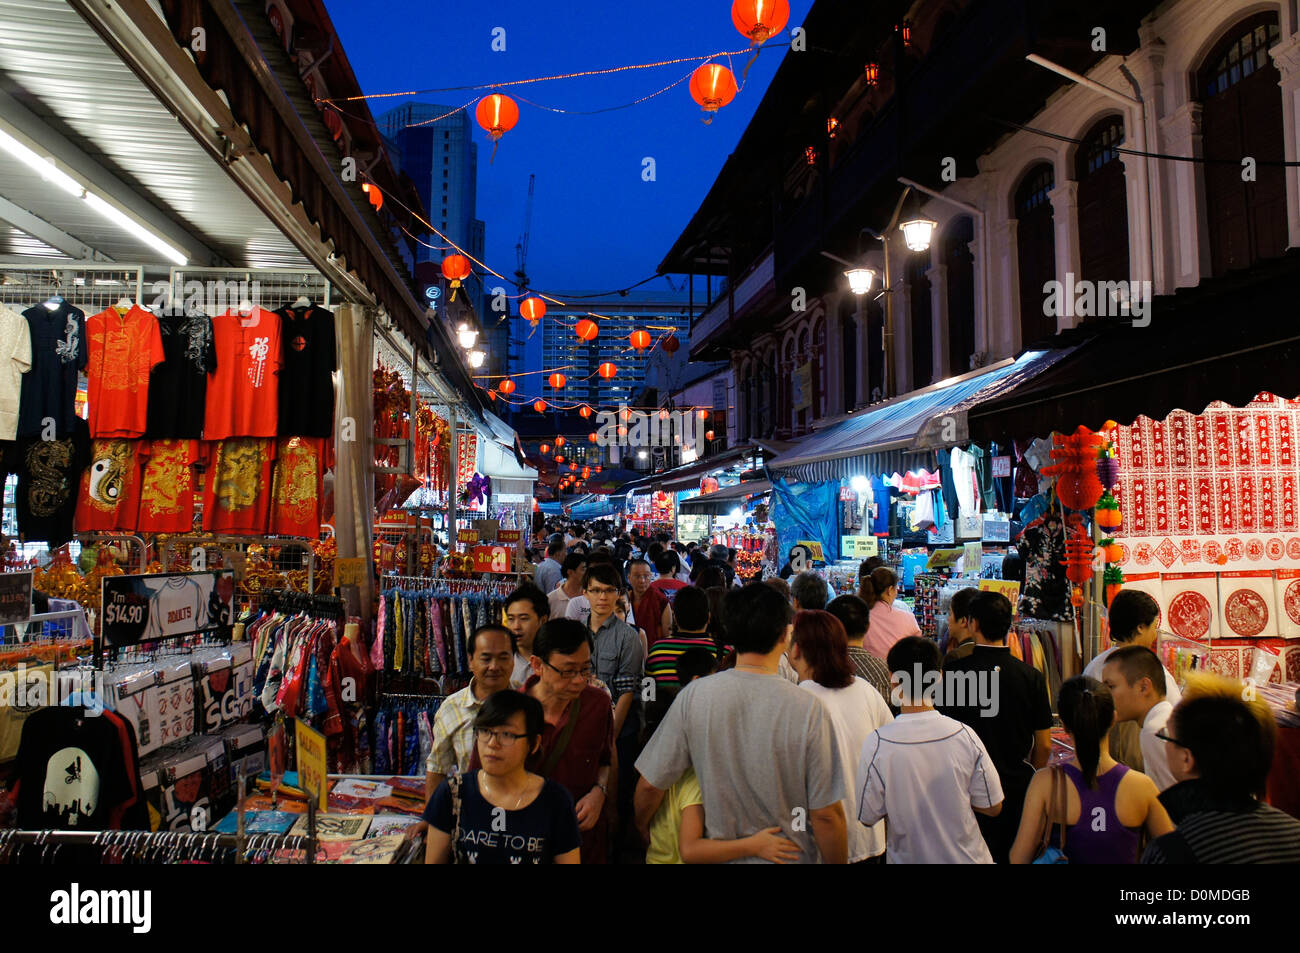 Singapore chinatown night market during Chinese New Year festive season Stock Photo